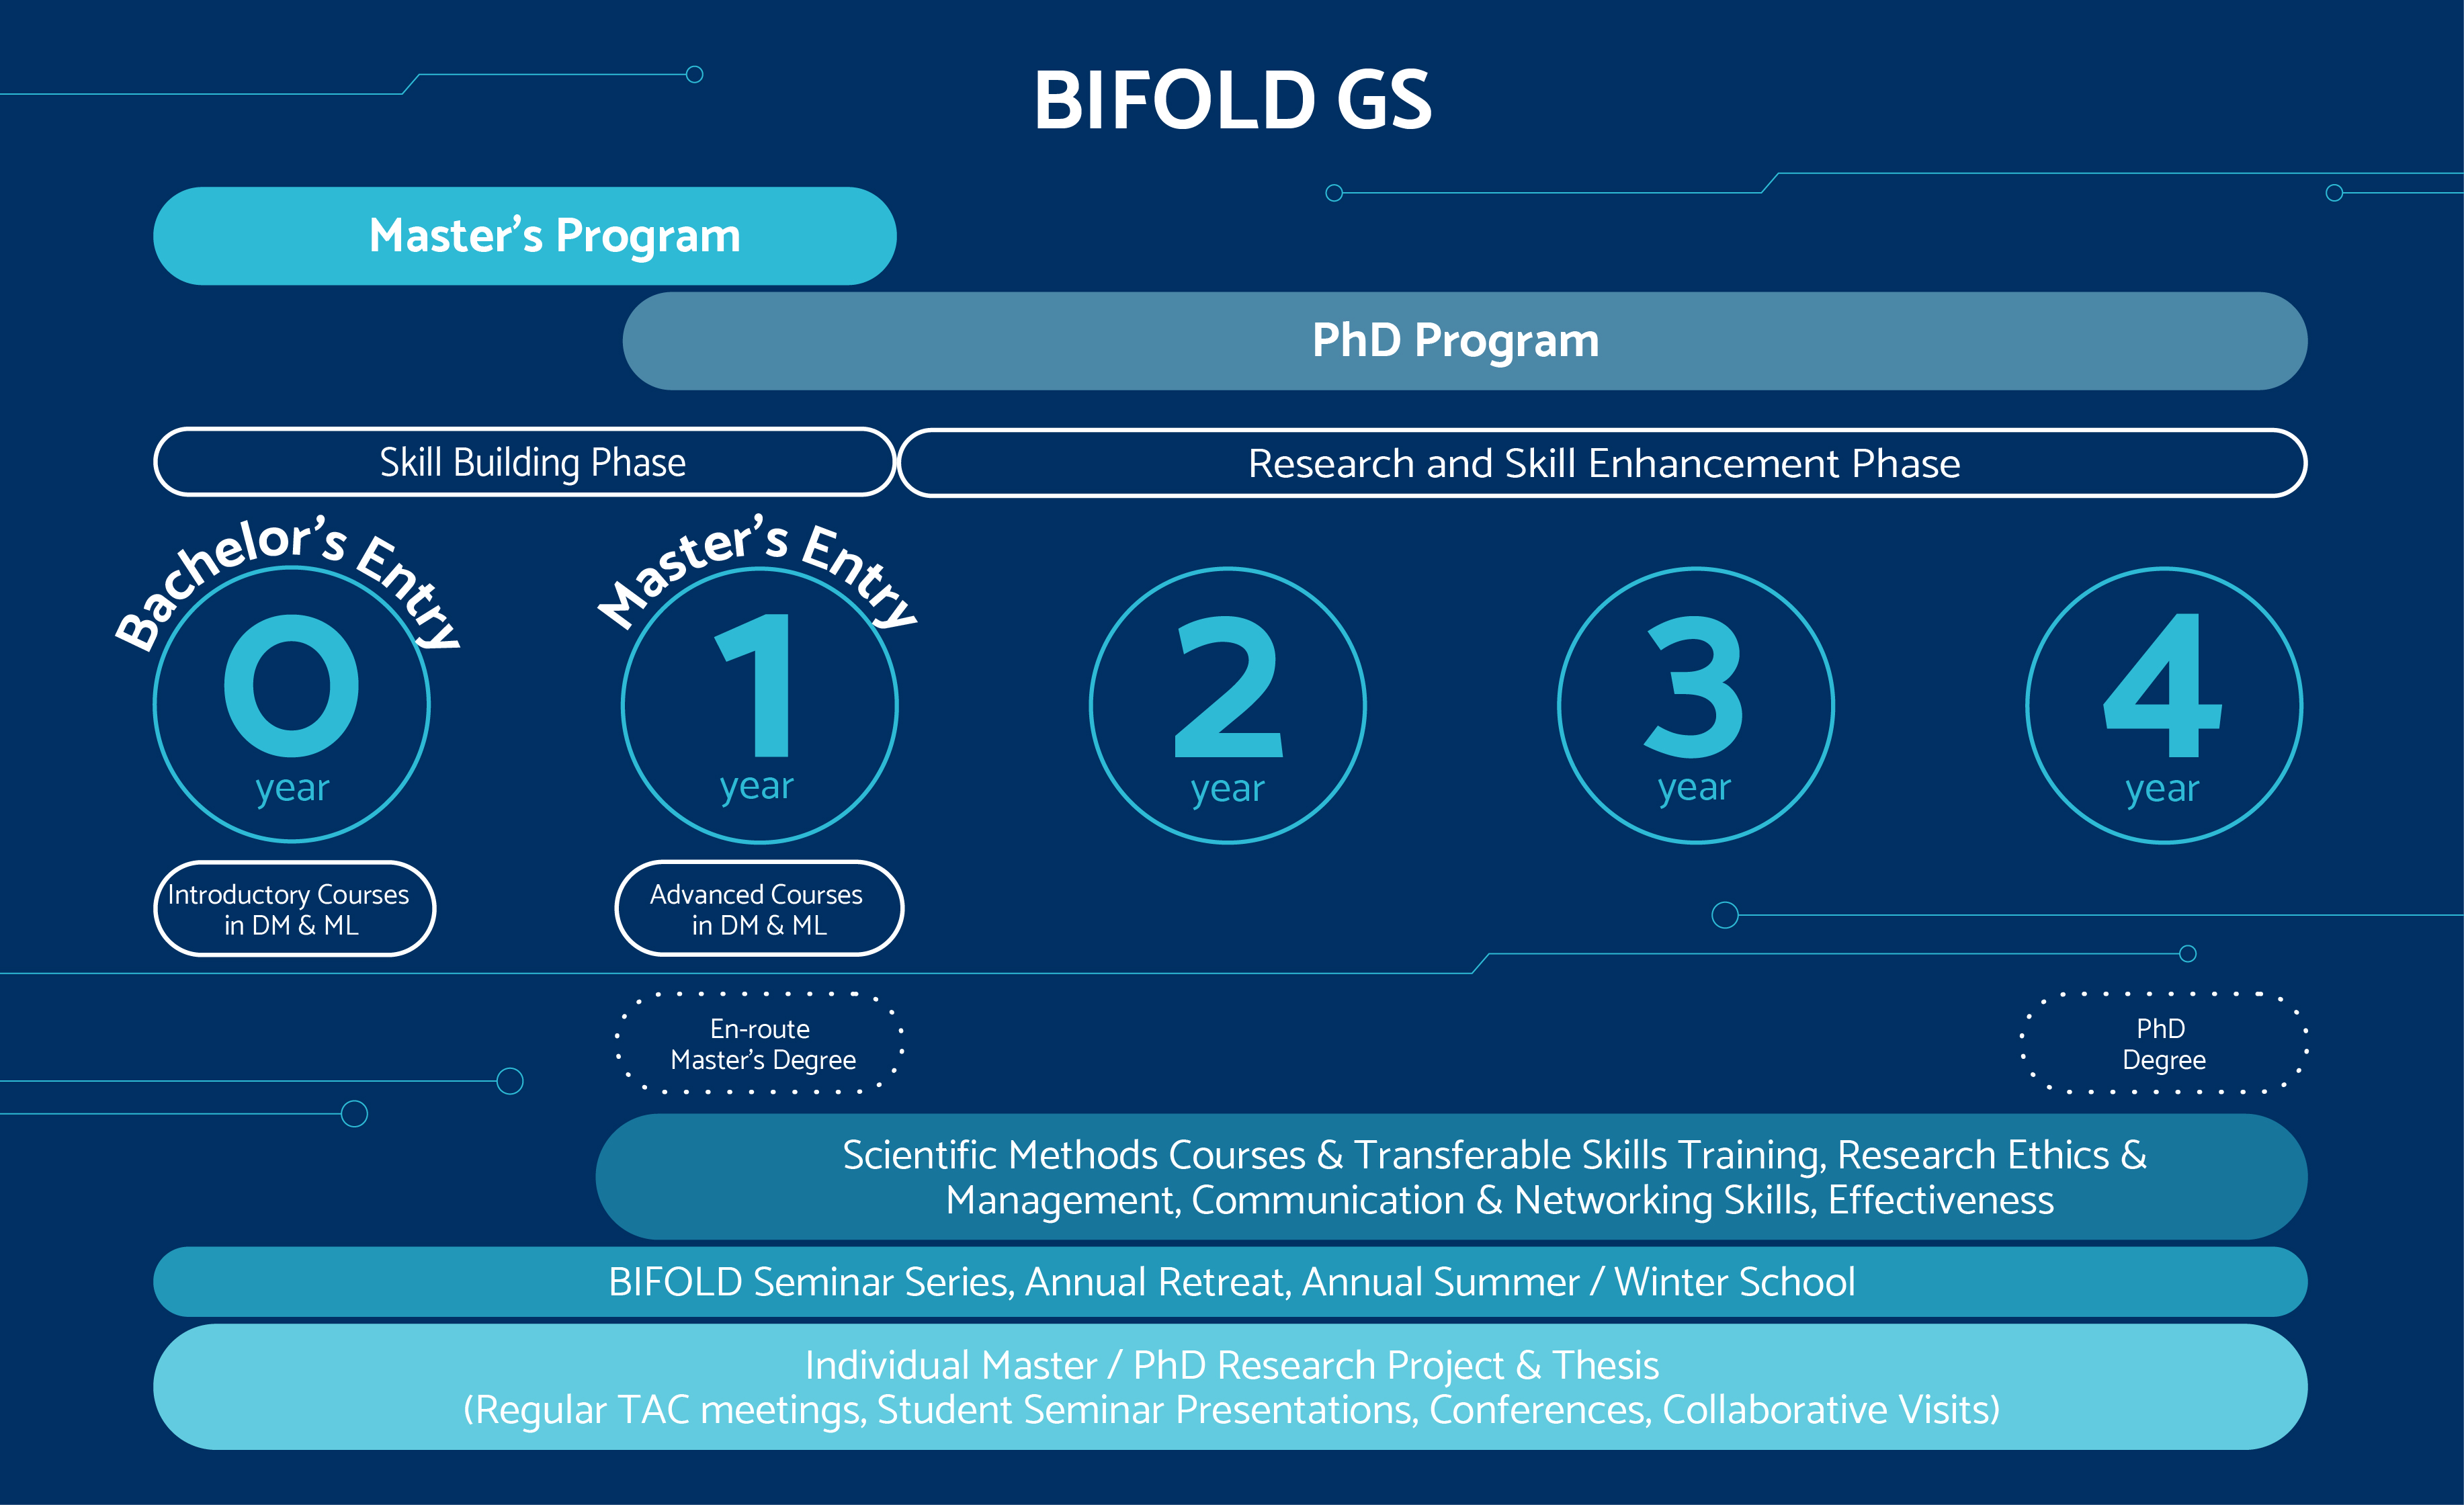 Schema of the BIFOLD Graduate School